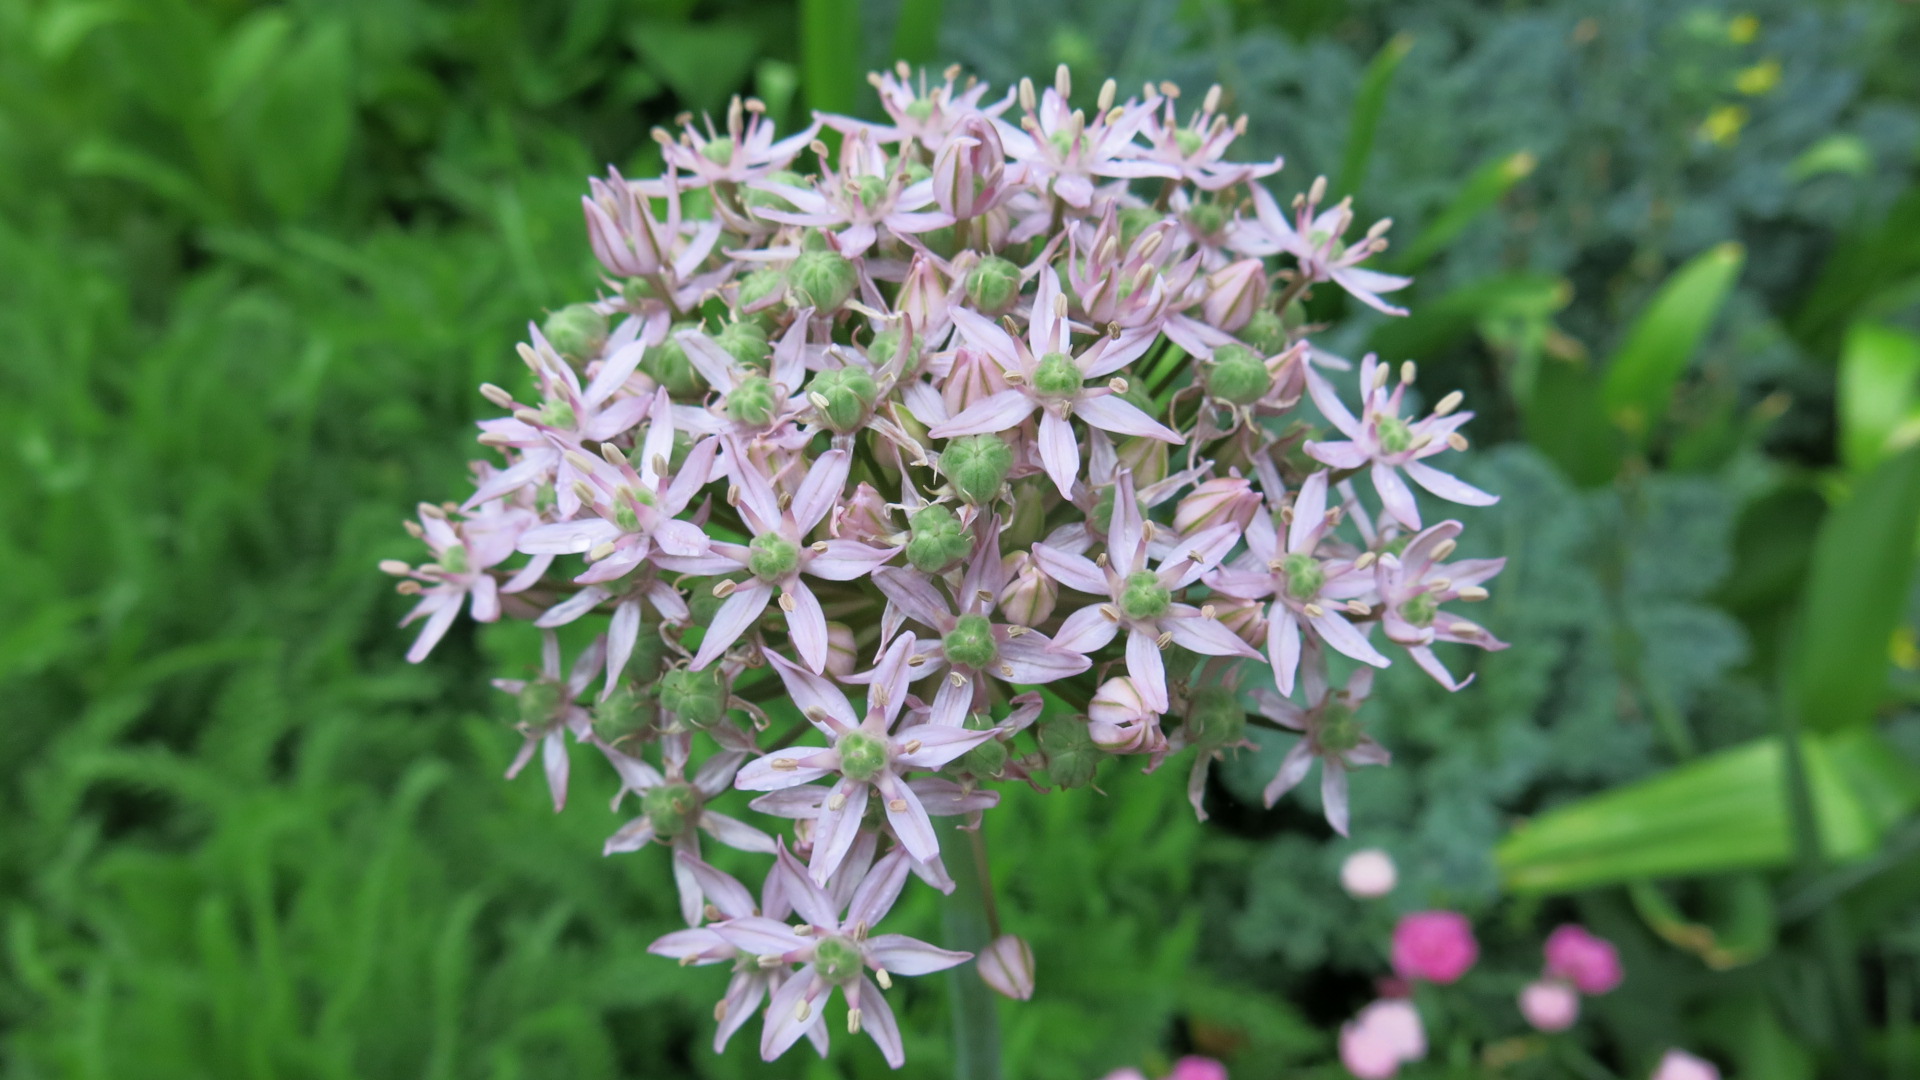 Allium nigrum 'Pink Jewel' has pale pink flowers with green "eyes."